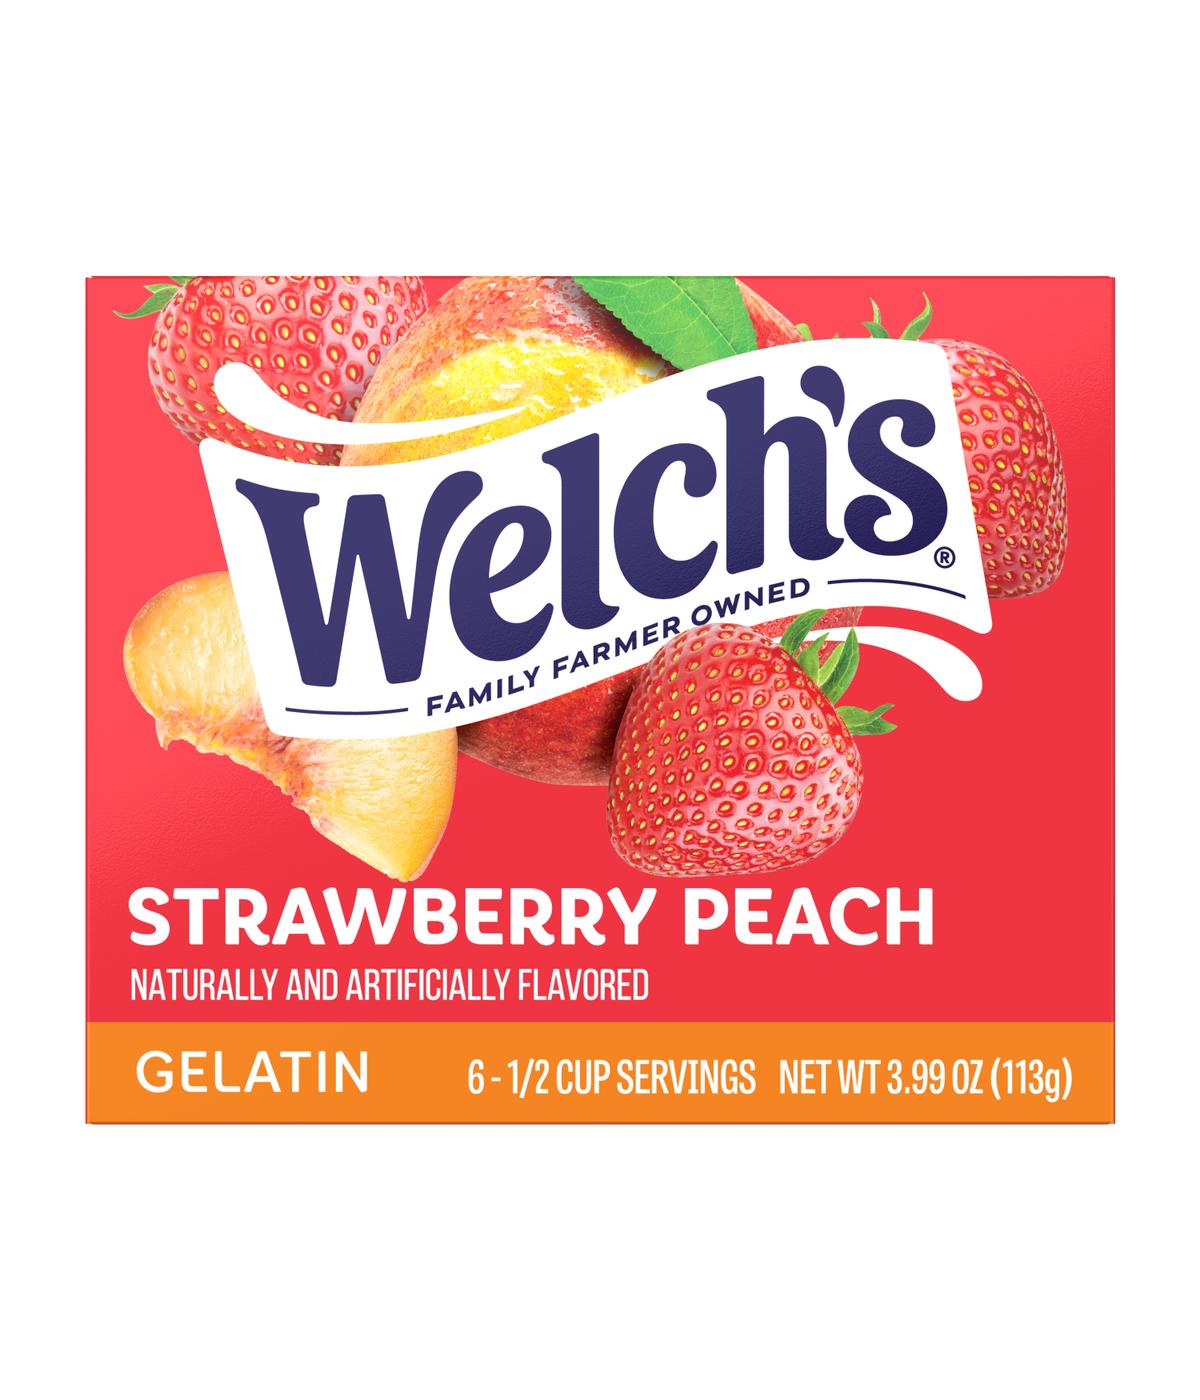 Welch's Gelatin - Strawberry Peach; image 1 of 3